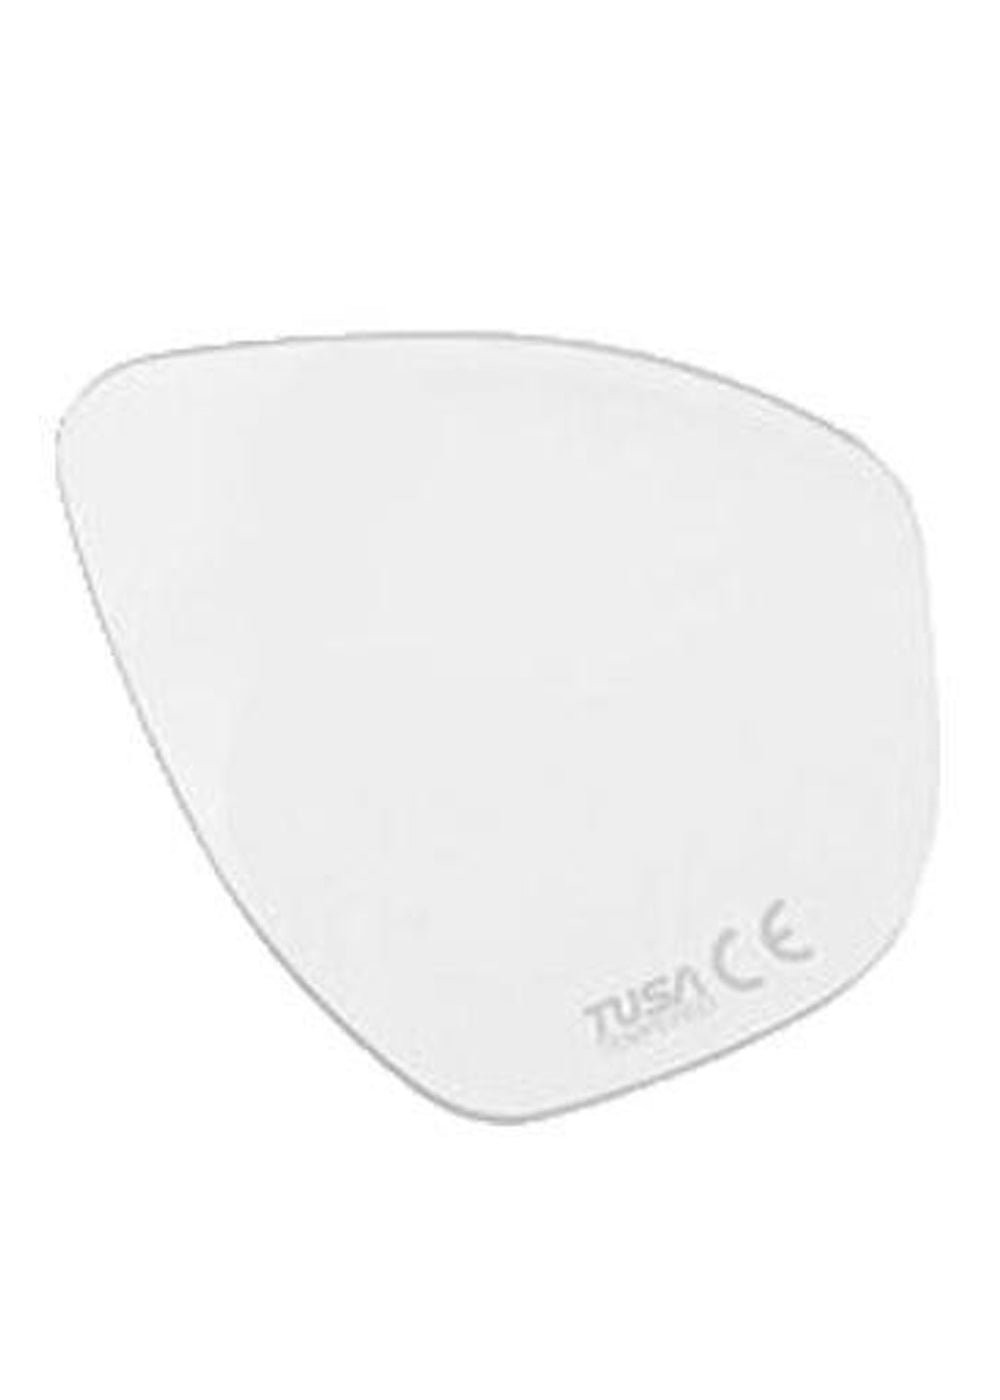 TUSA Corrective Lens LEFT OR RIGHT +1.0 (Full Lens) - Suit Tusa Ceos Mask